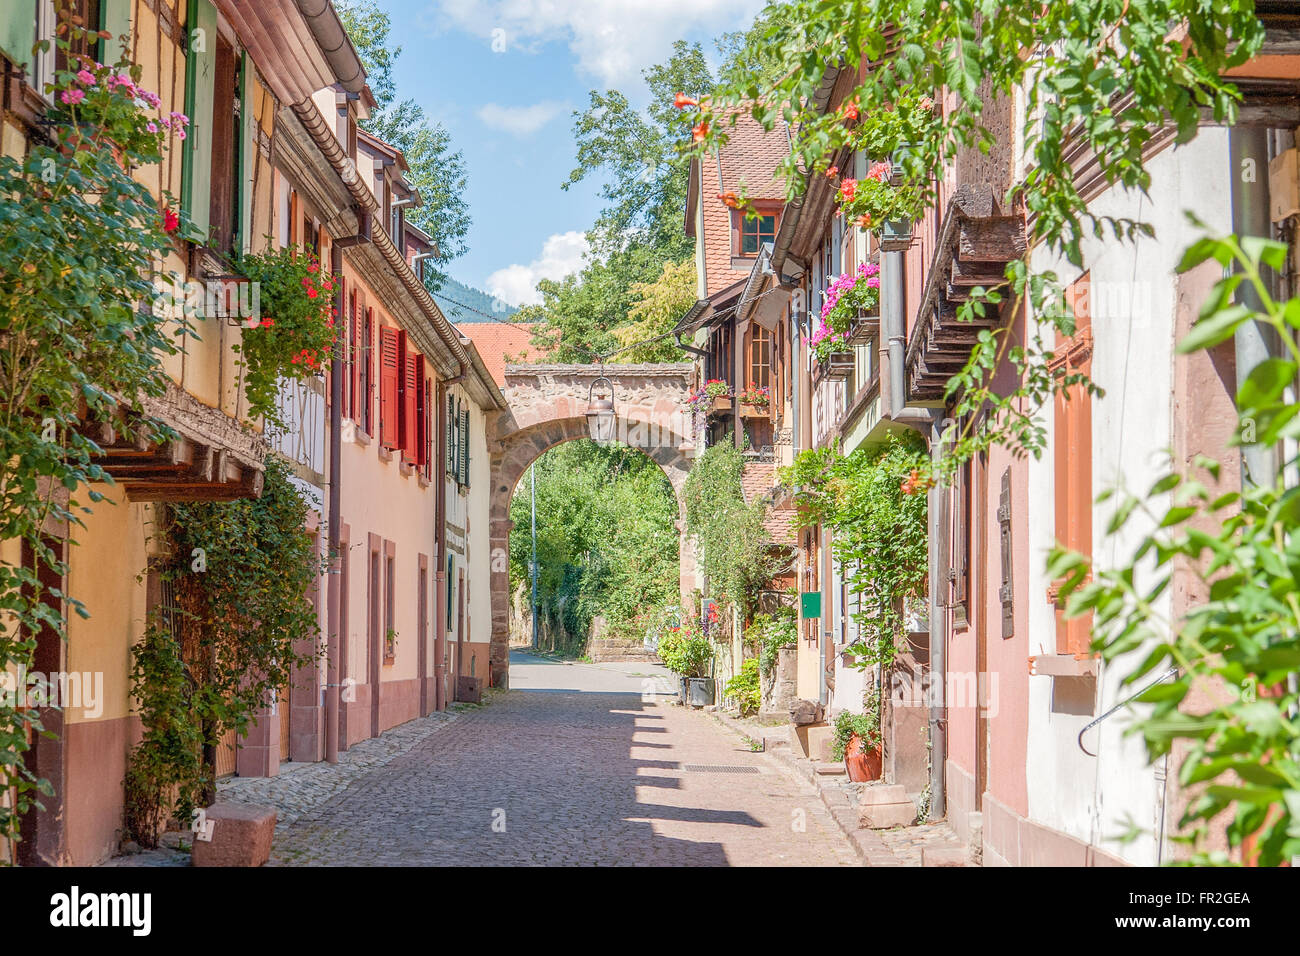 Idyllic scenery in Kaysersberg, a city in Alsace, France Stock Photo